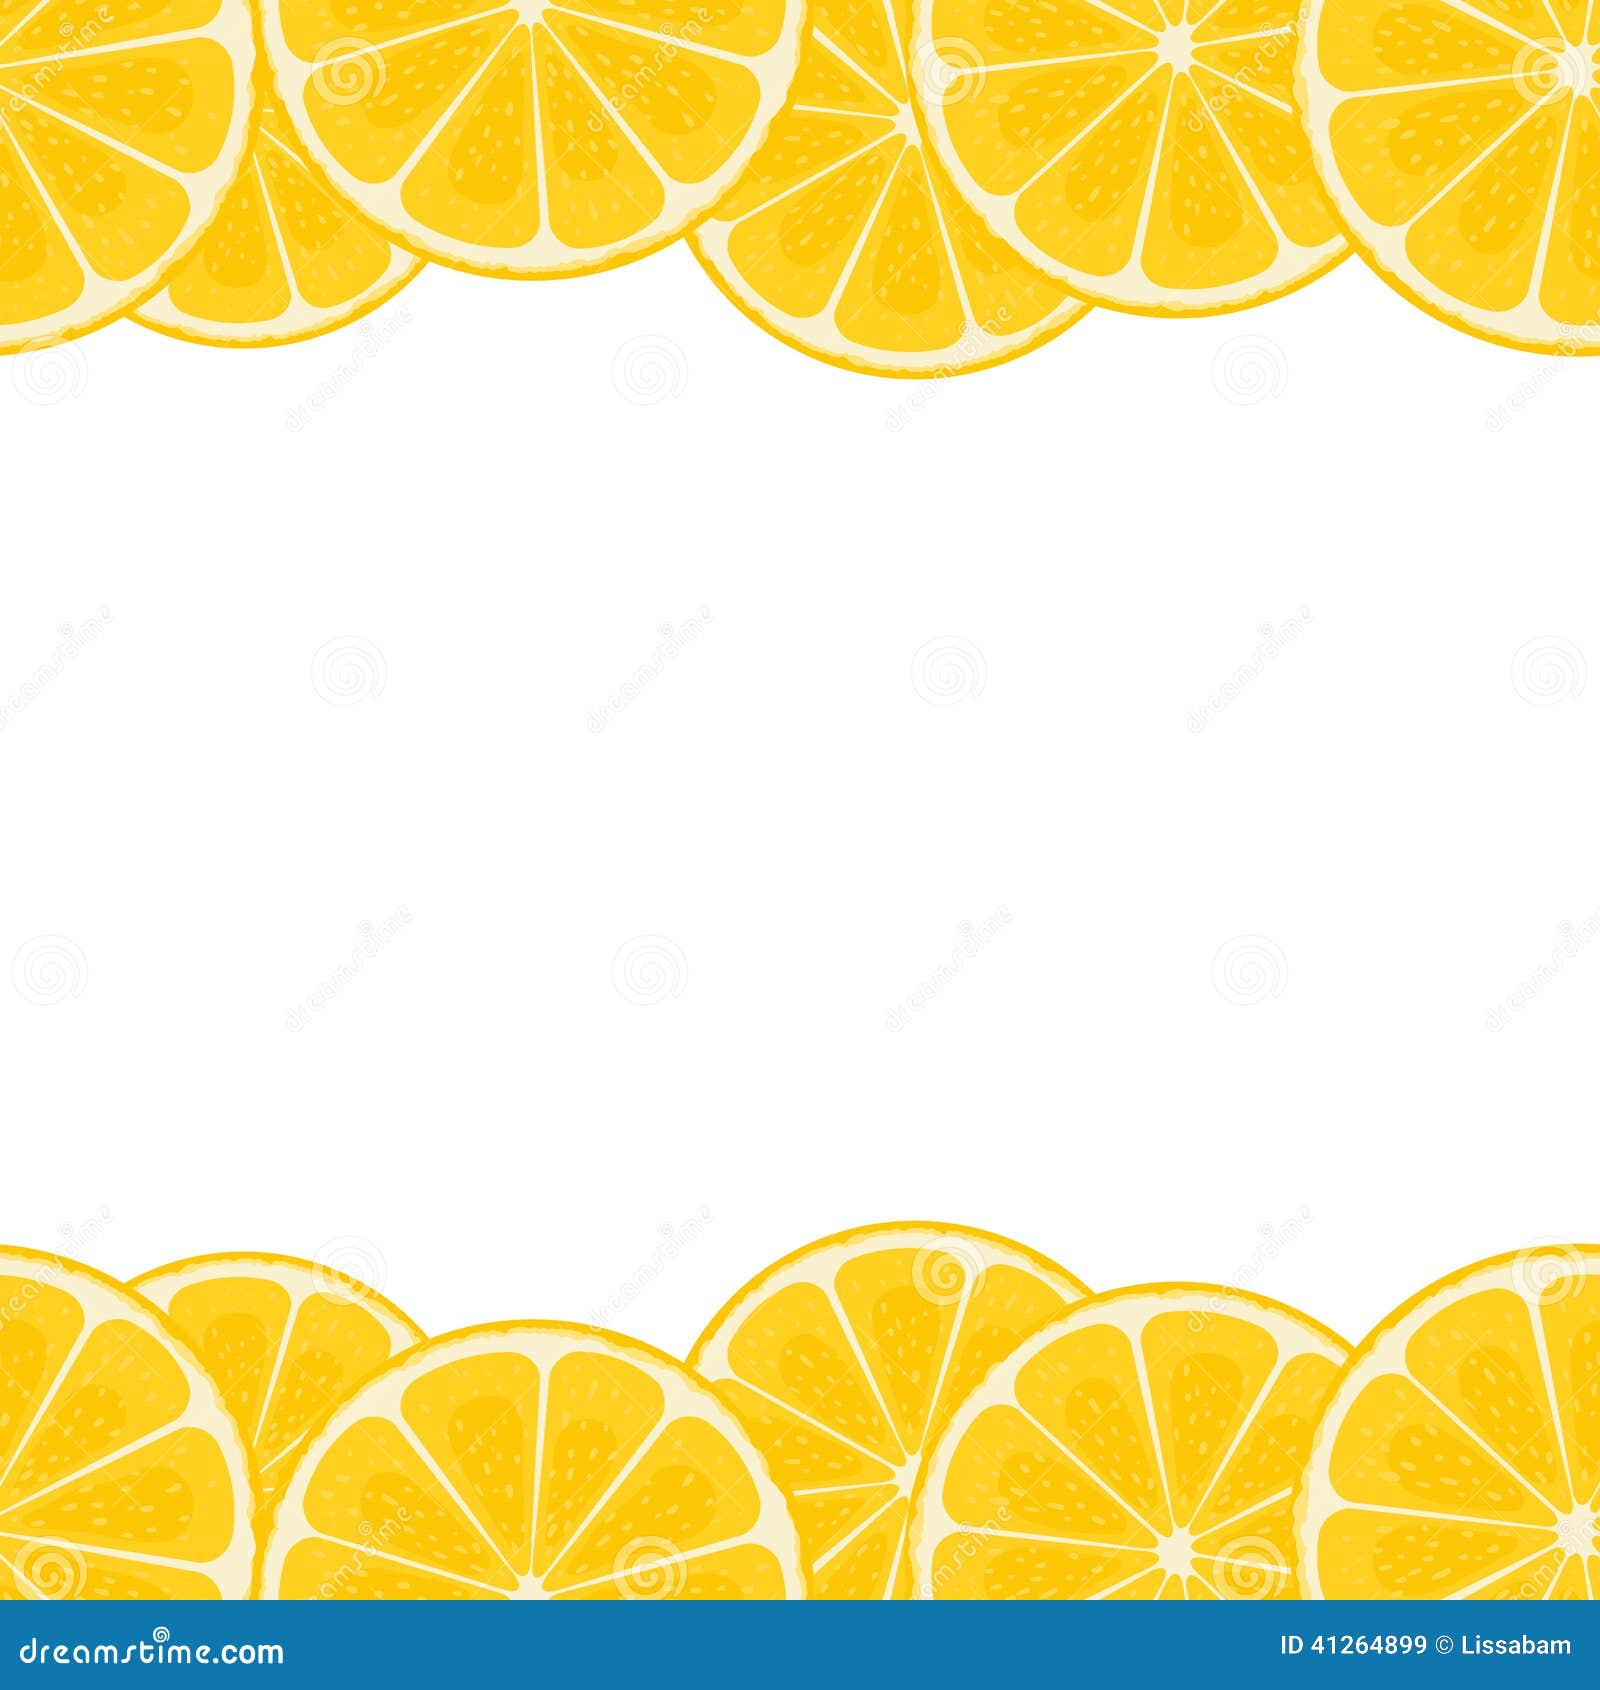 lemon border clip art - photo #7